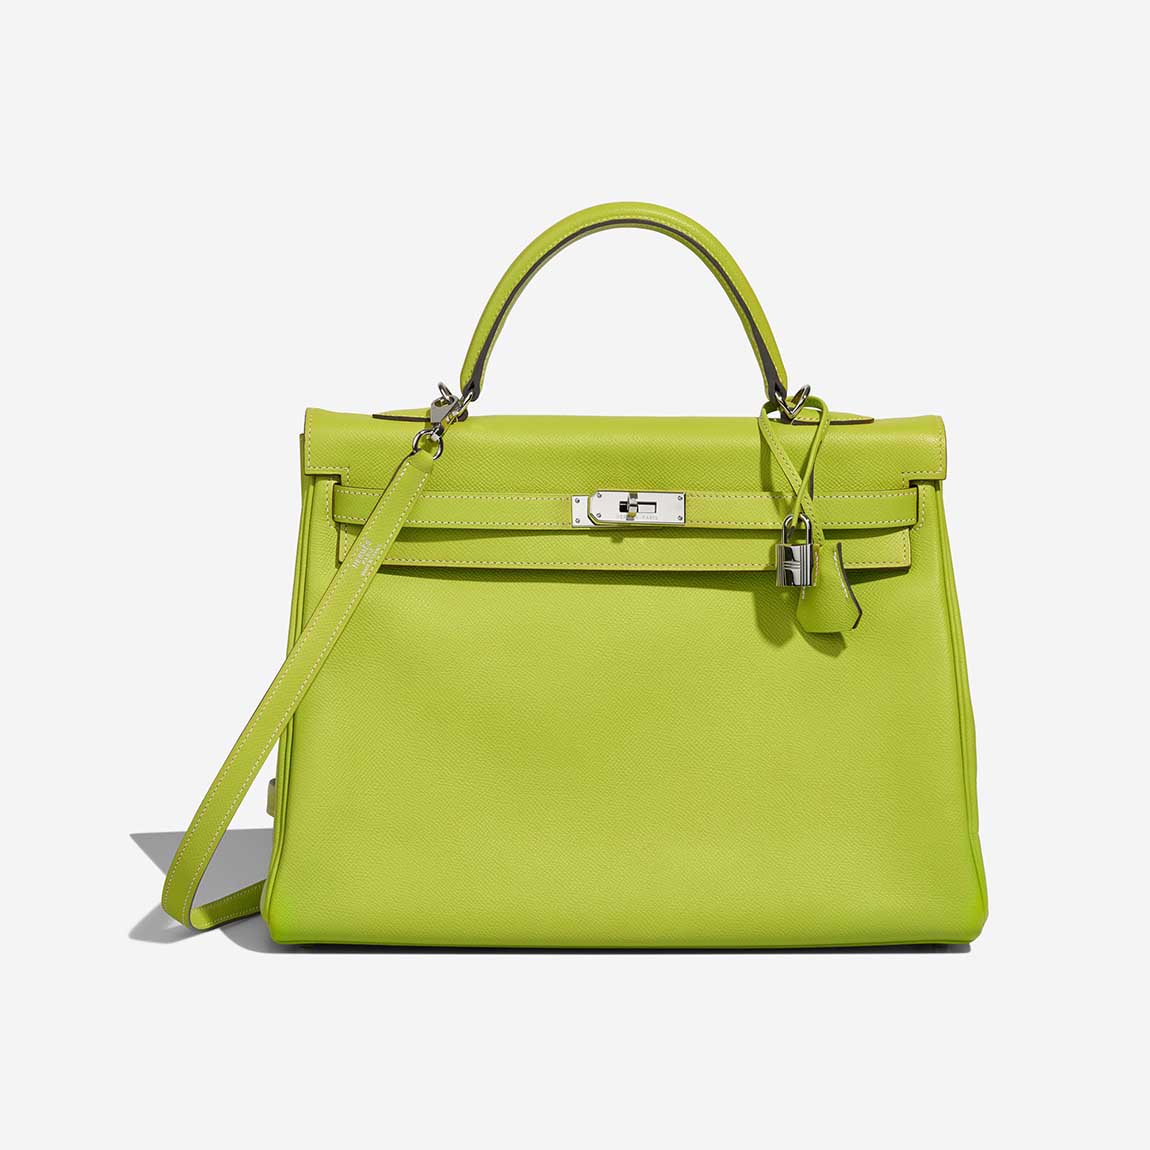 Hermès Kelly 35 Epsom Kiwi / Lichen Front | Sell your designer bag